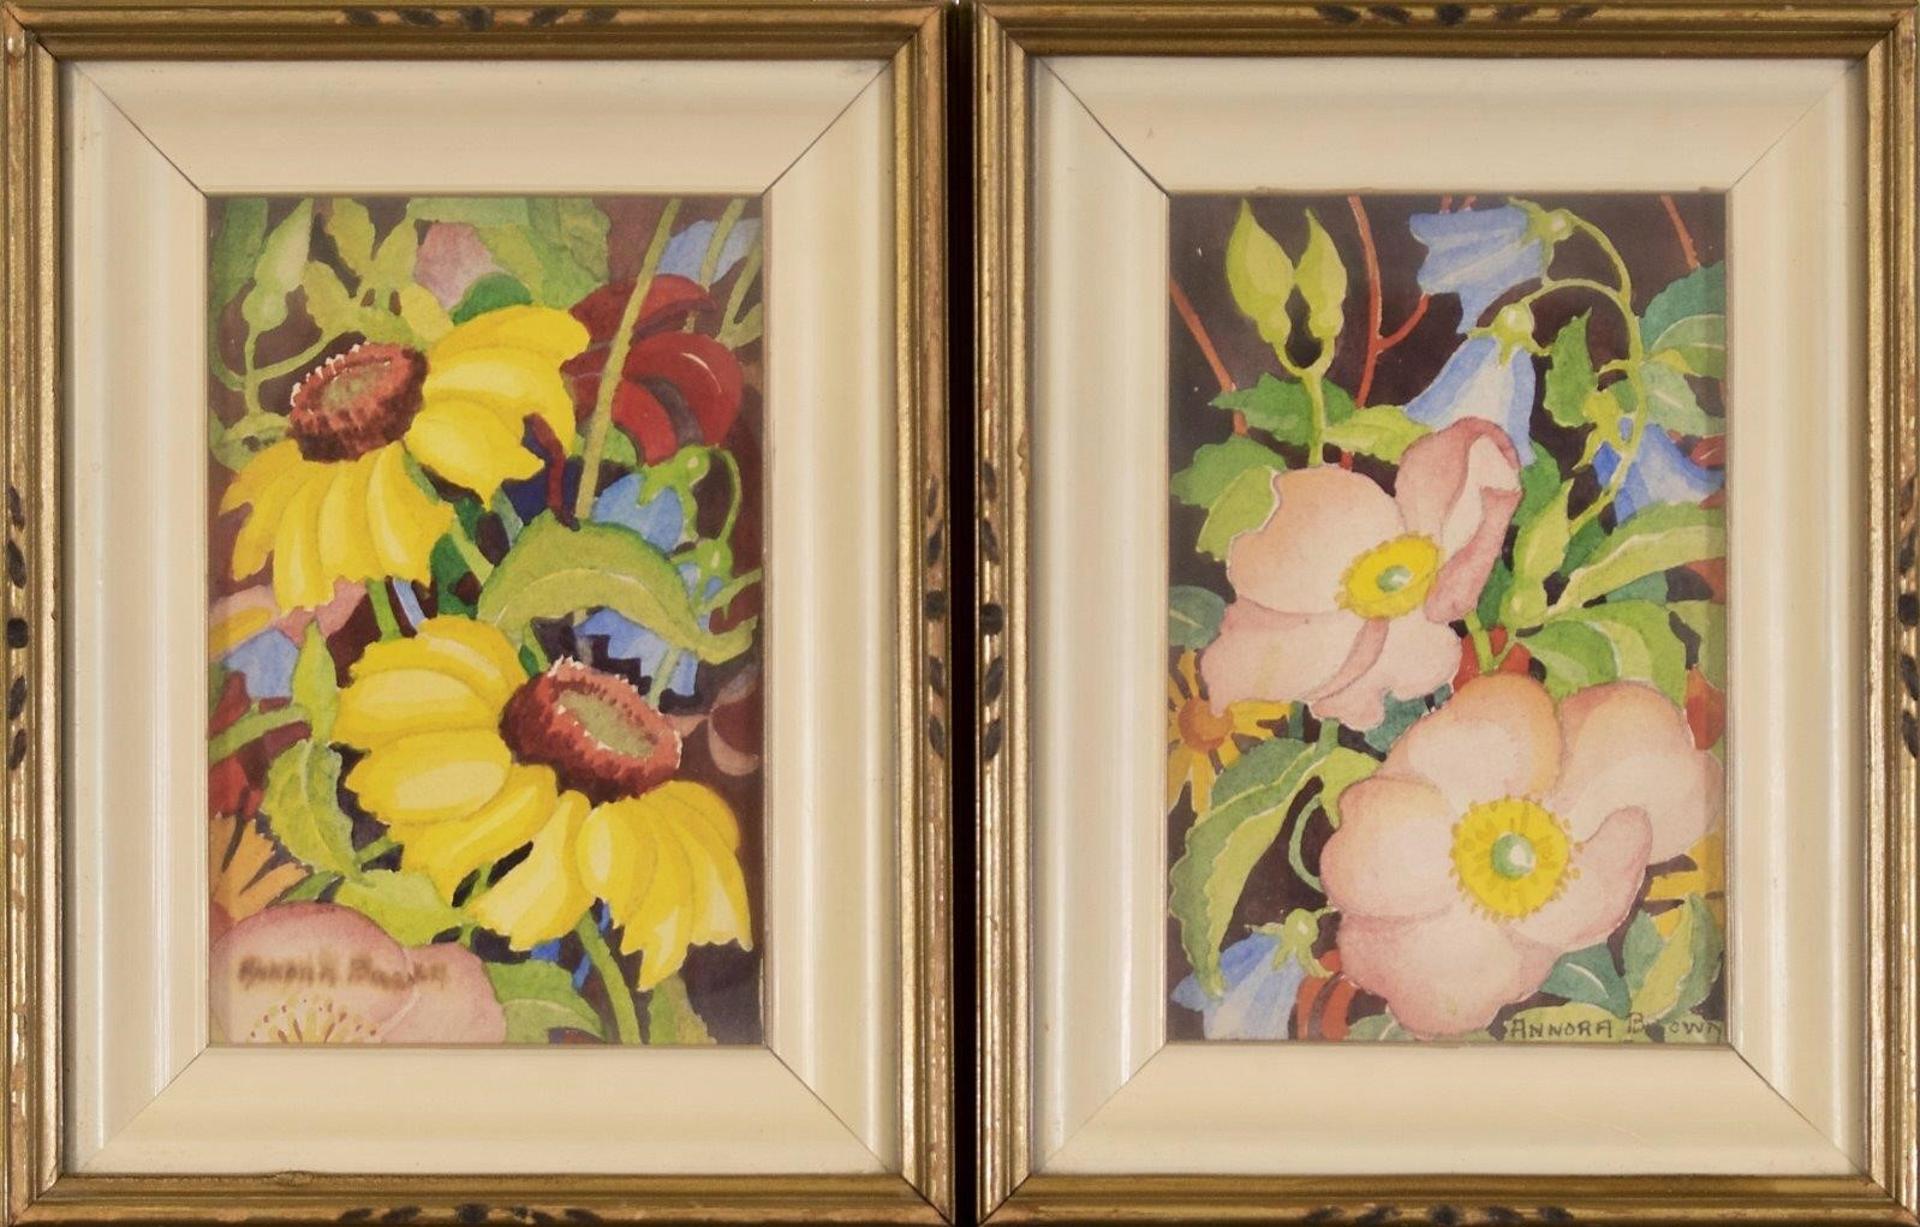 Annora Brown (1899-1987) - Untitled, Blanket Flower / Untitled, Alberta Roses